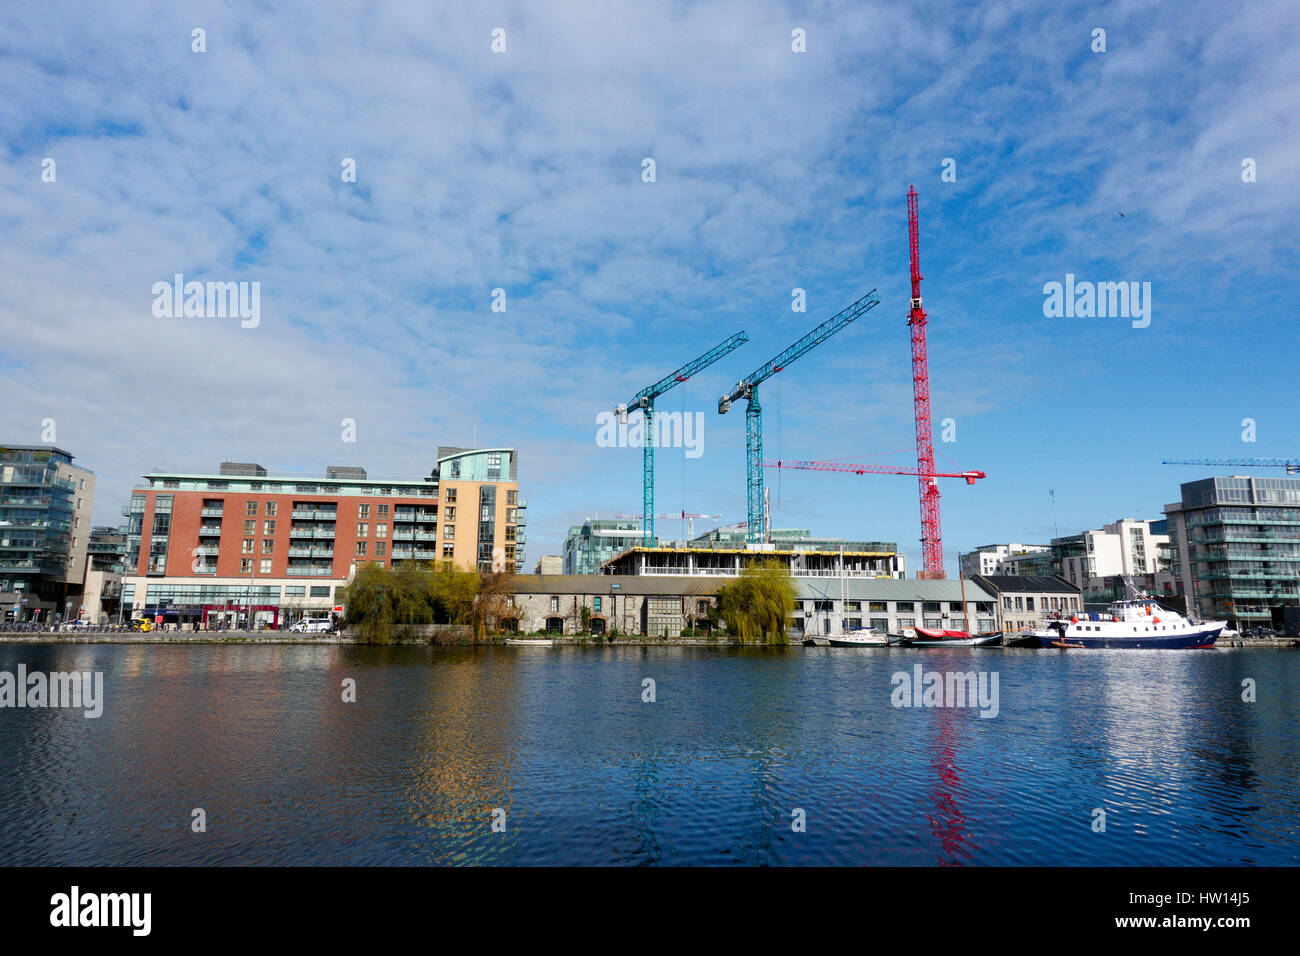 Dublin Grand Canal basin and Cranes build new developments Stock Photo